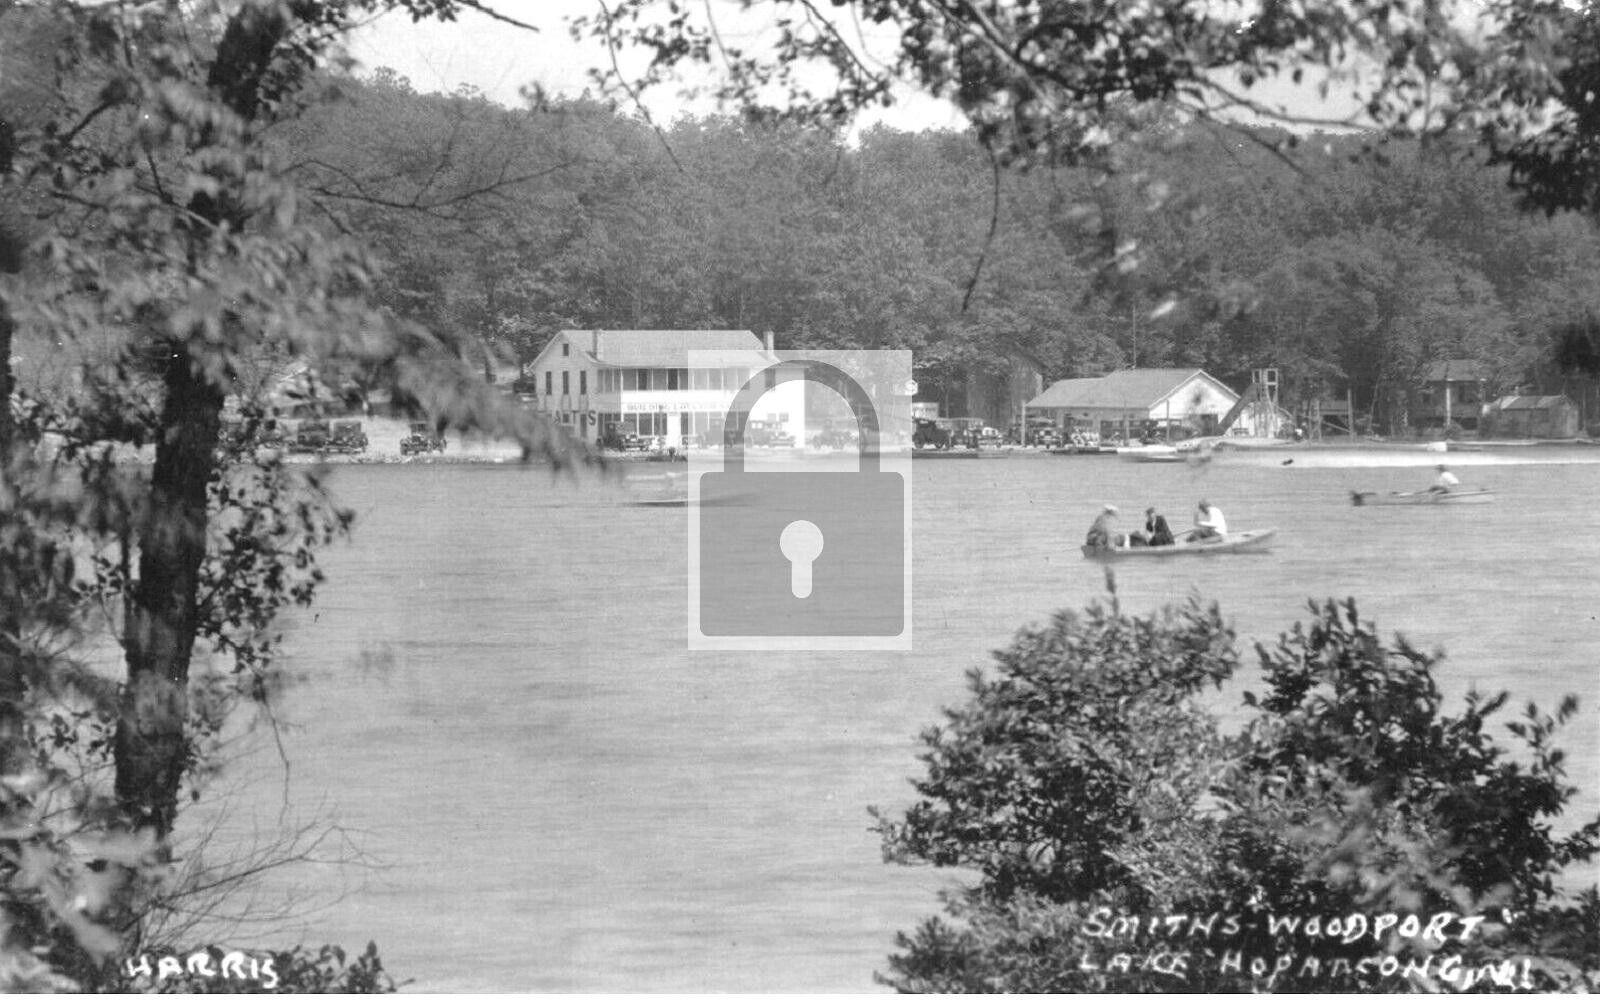 Smiths Woodport Lake Hopatcong New Jersey NJ Reprint Postcard